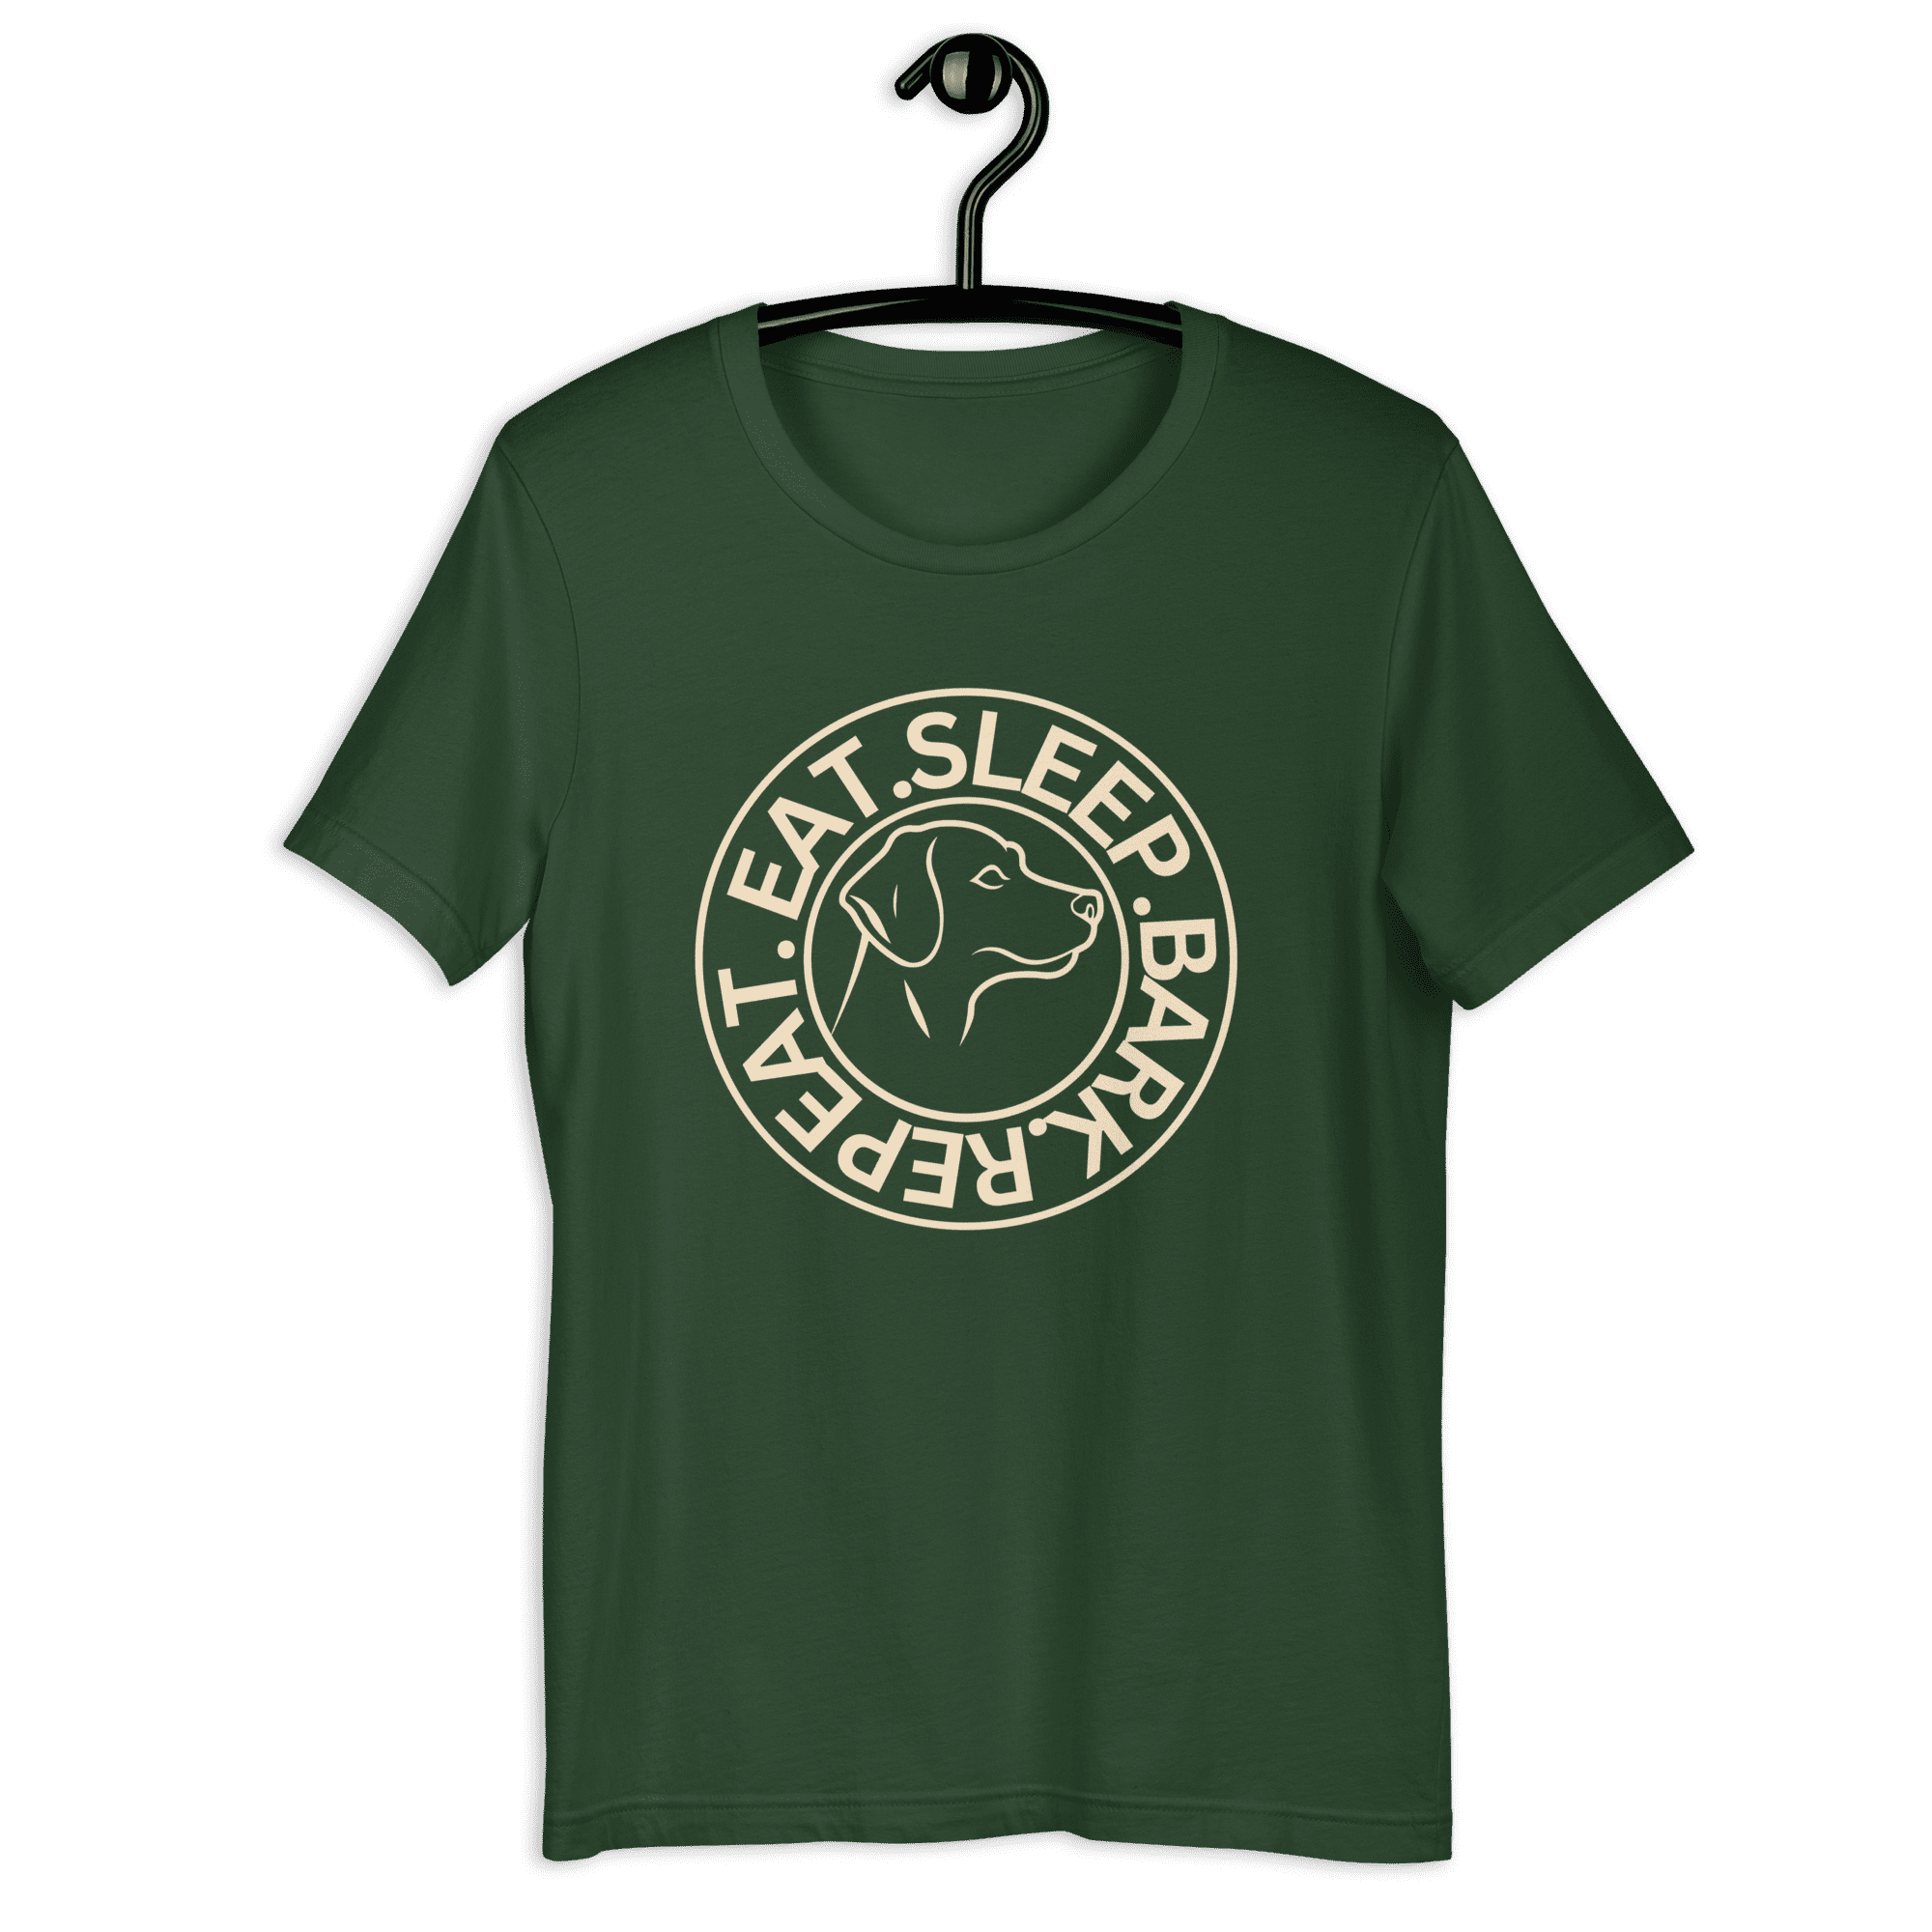 Eat Sleep Bark Repeat Labrador Retriever Unisex T-Shirt. Green